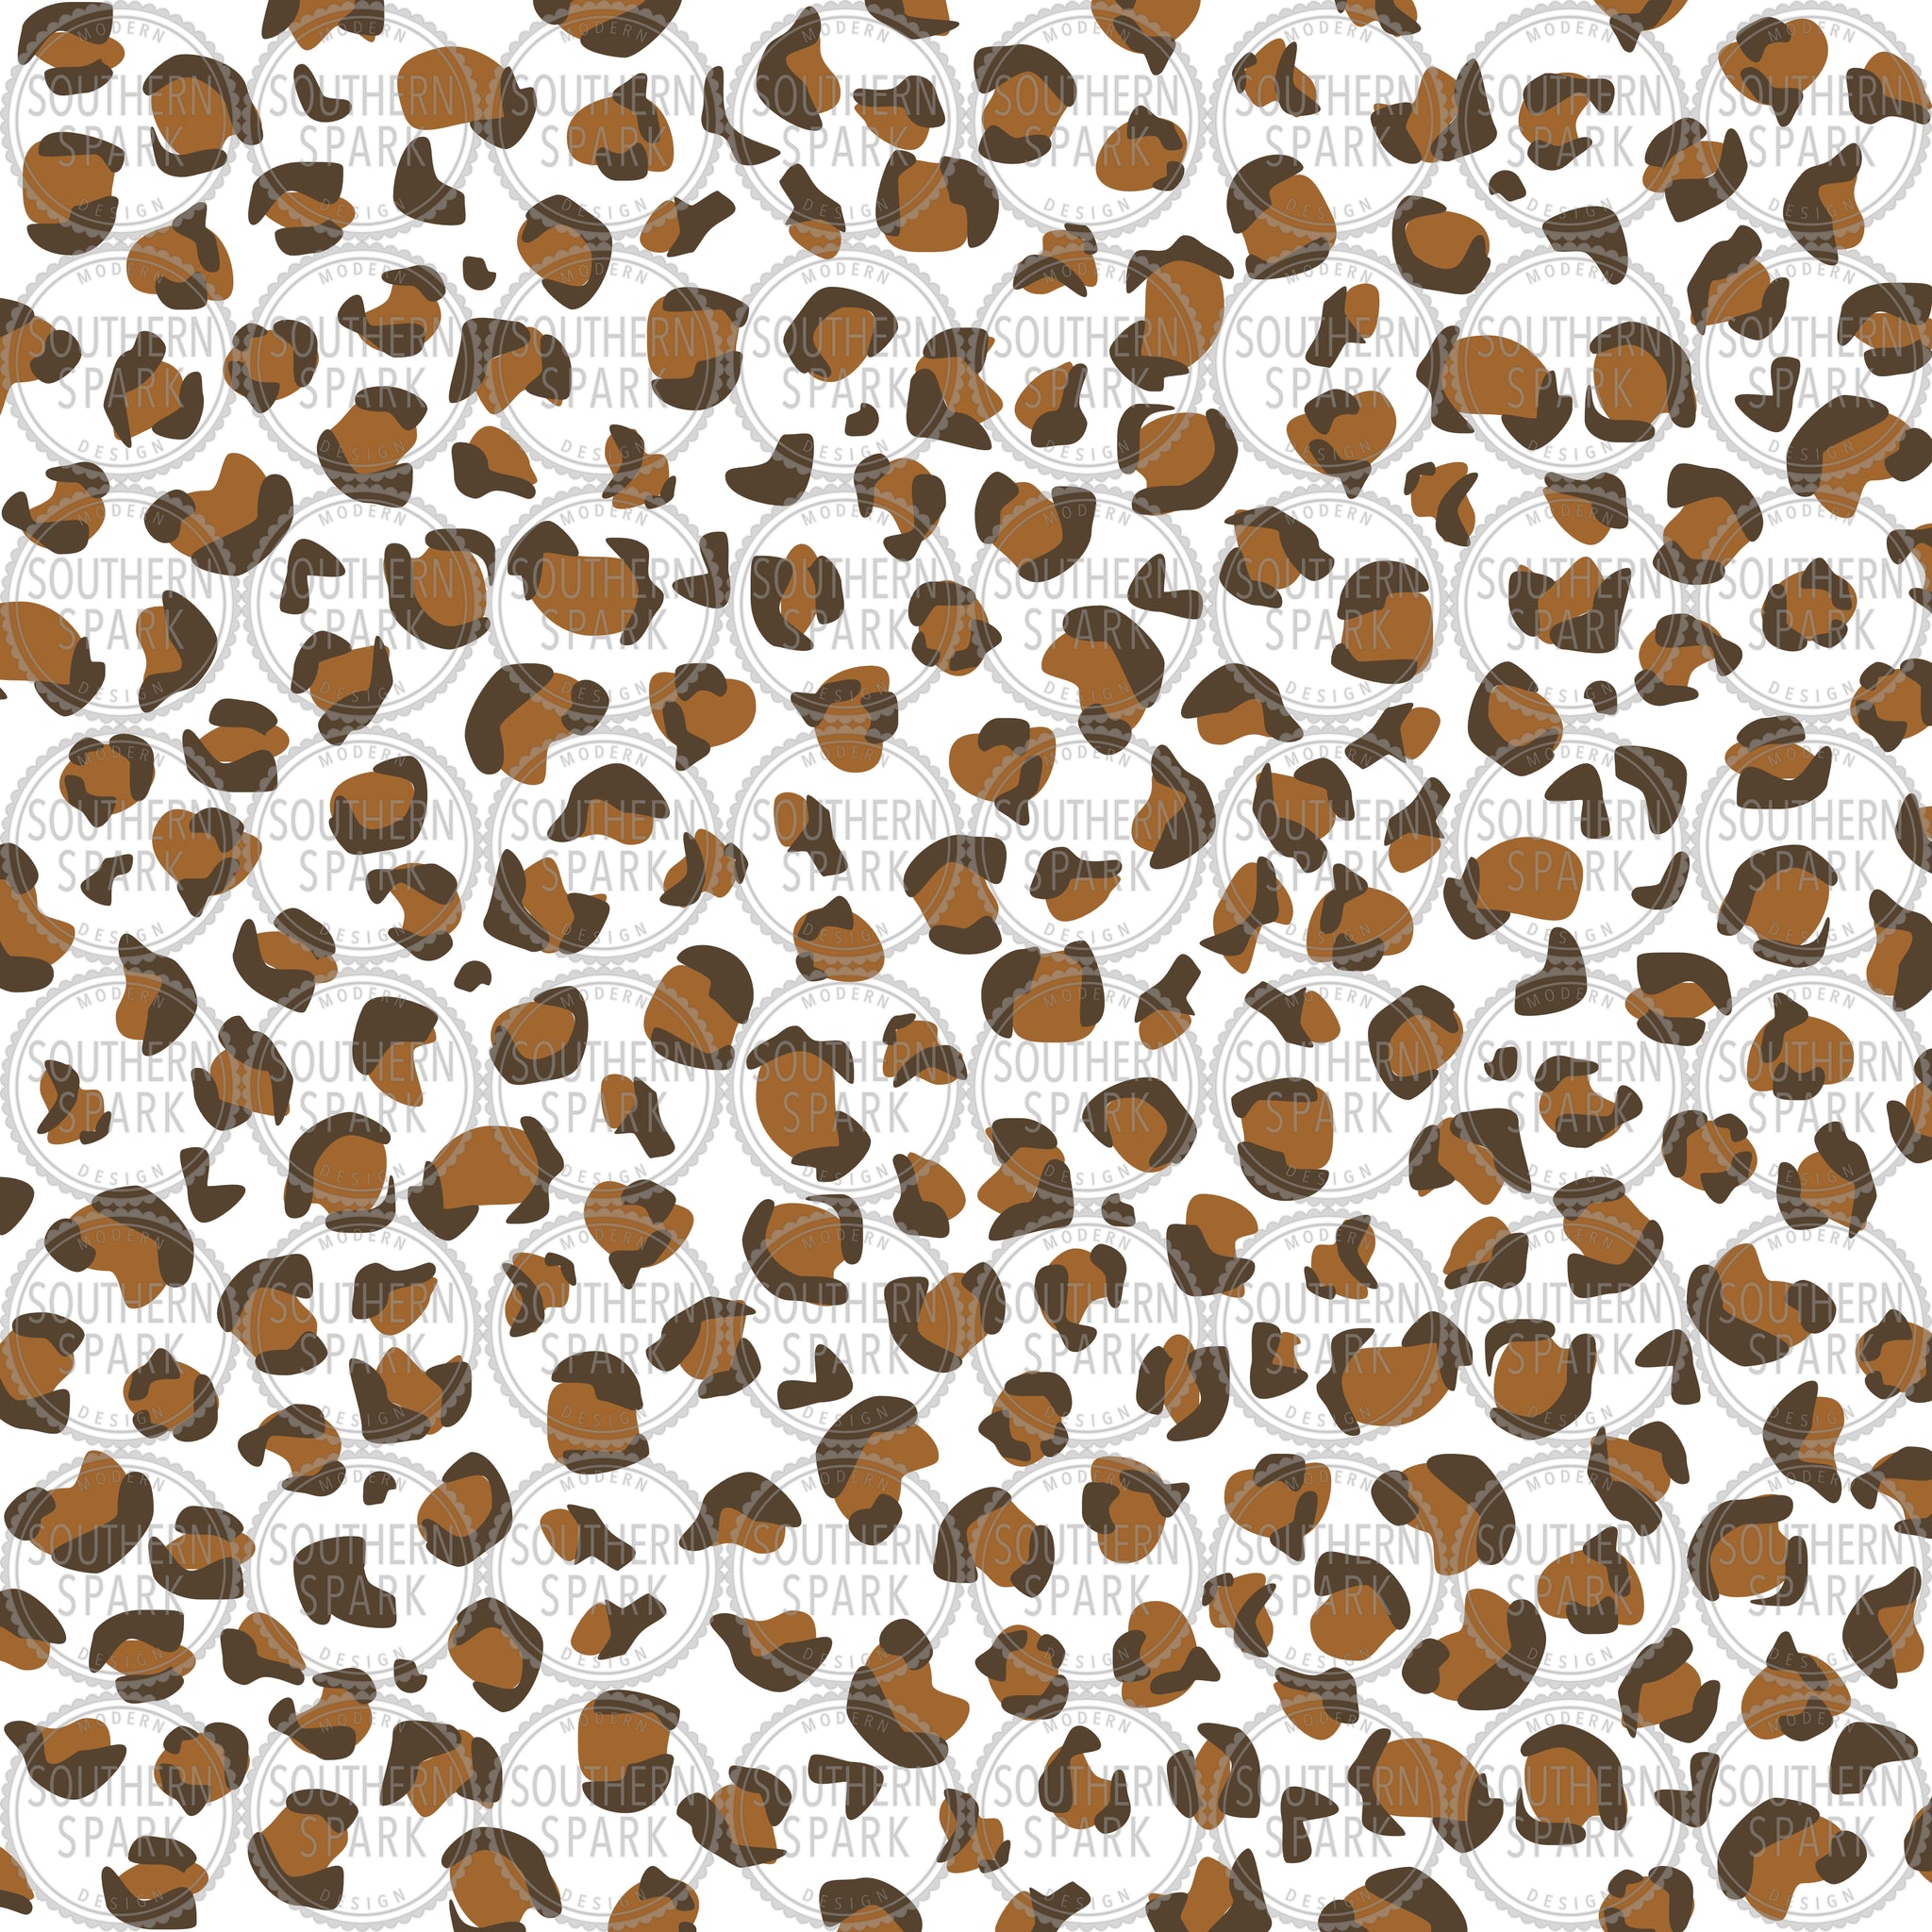 Leopard Print SVG Bundle Cheetah Print SVG